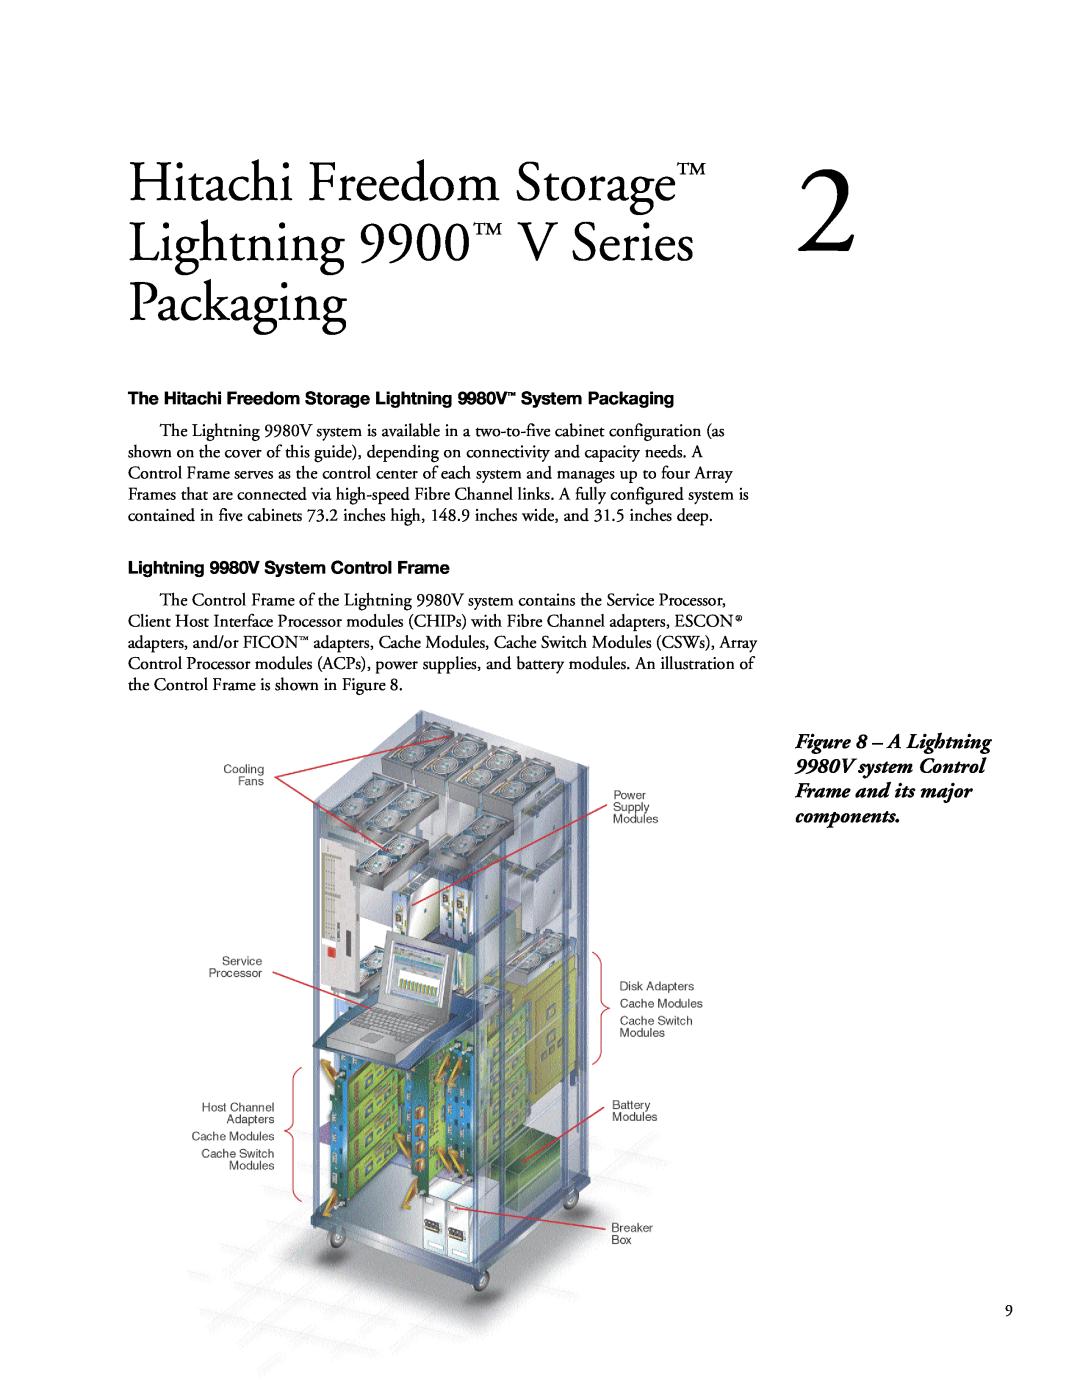 Hitachi manual Hitachi Freedom Storage, Lightning 9900 V Series, Packaging, Lightning 9980V System Control Frame 